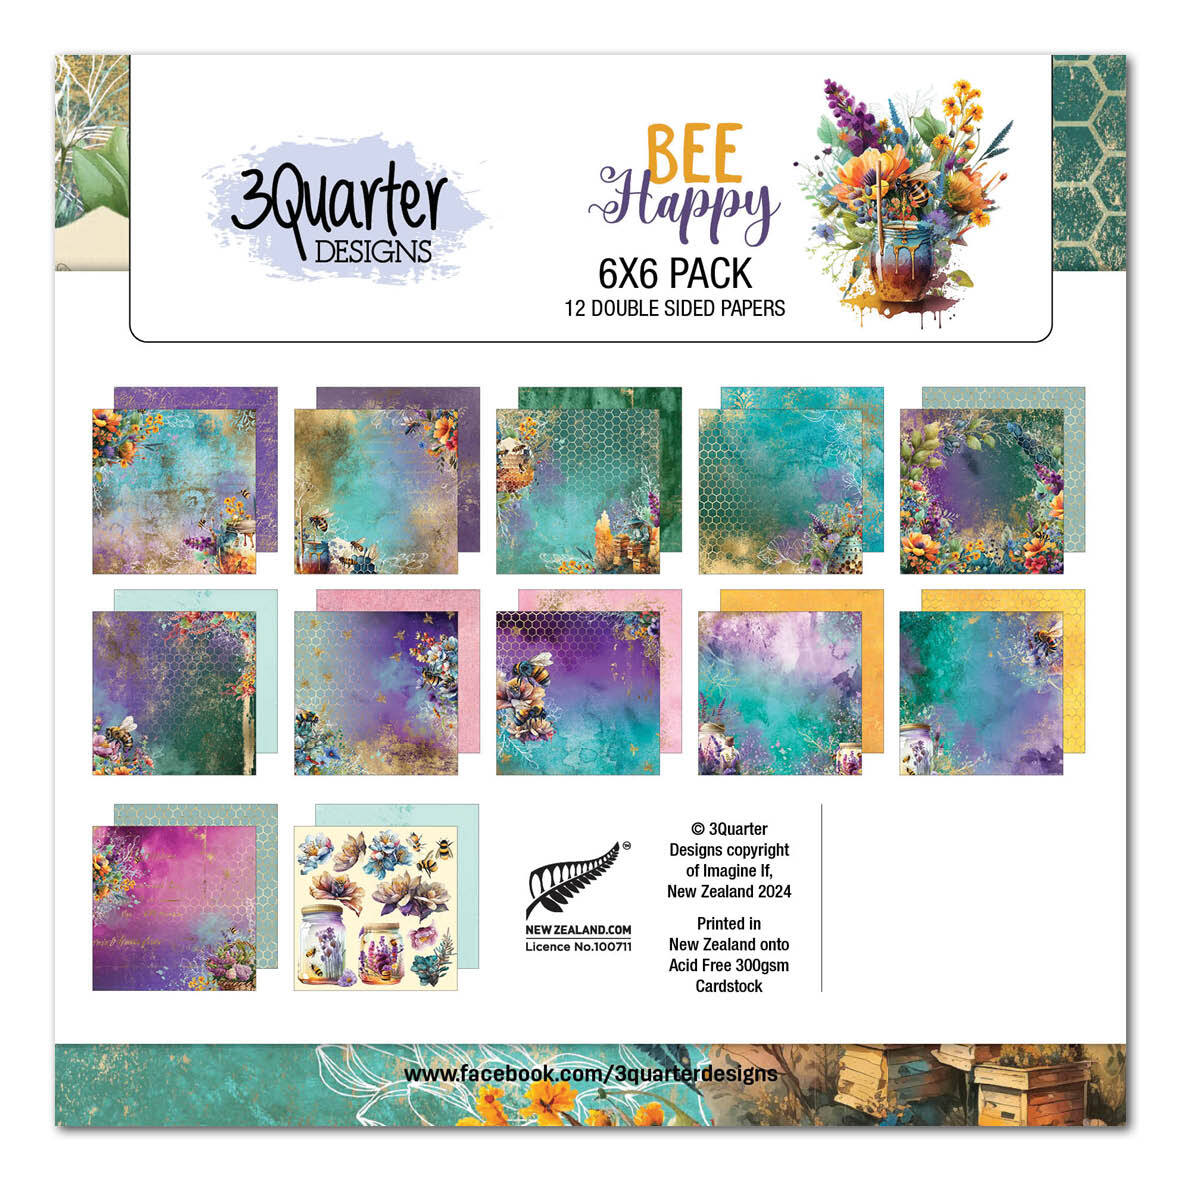 3Quarter Designs - Bee Happy - 6x6 Pack